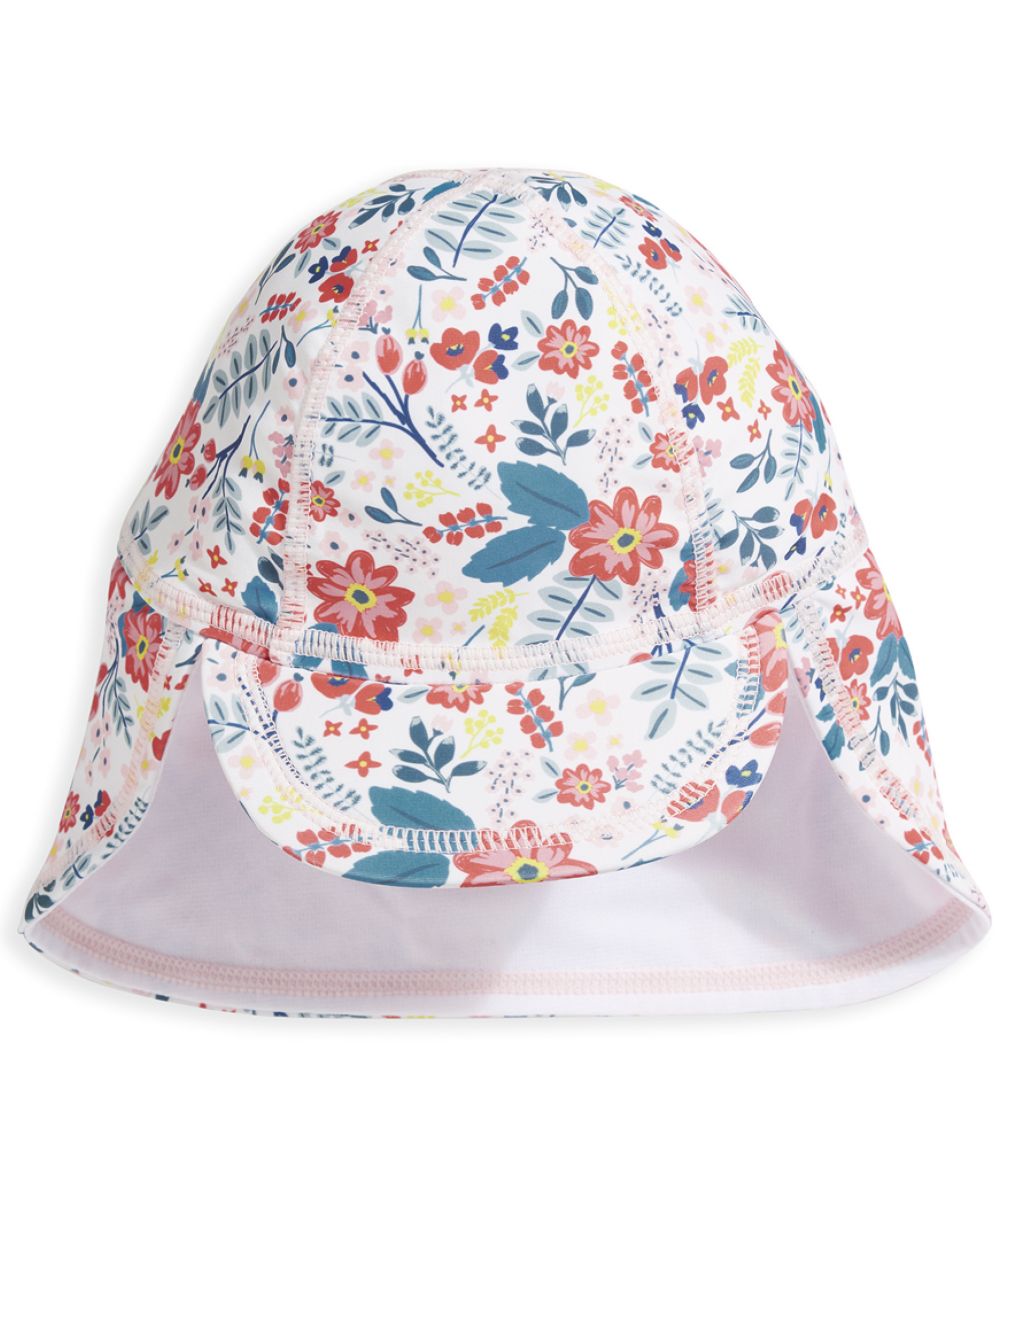 Kids' Floral Sun Hat (0-3 Yrs)